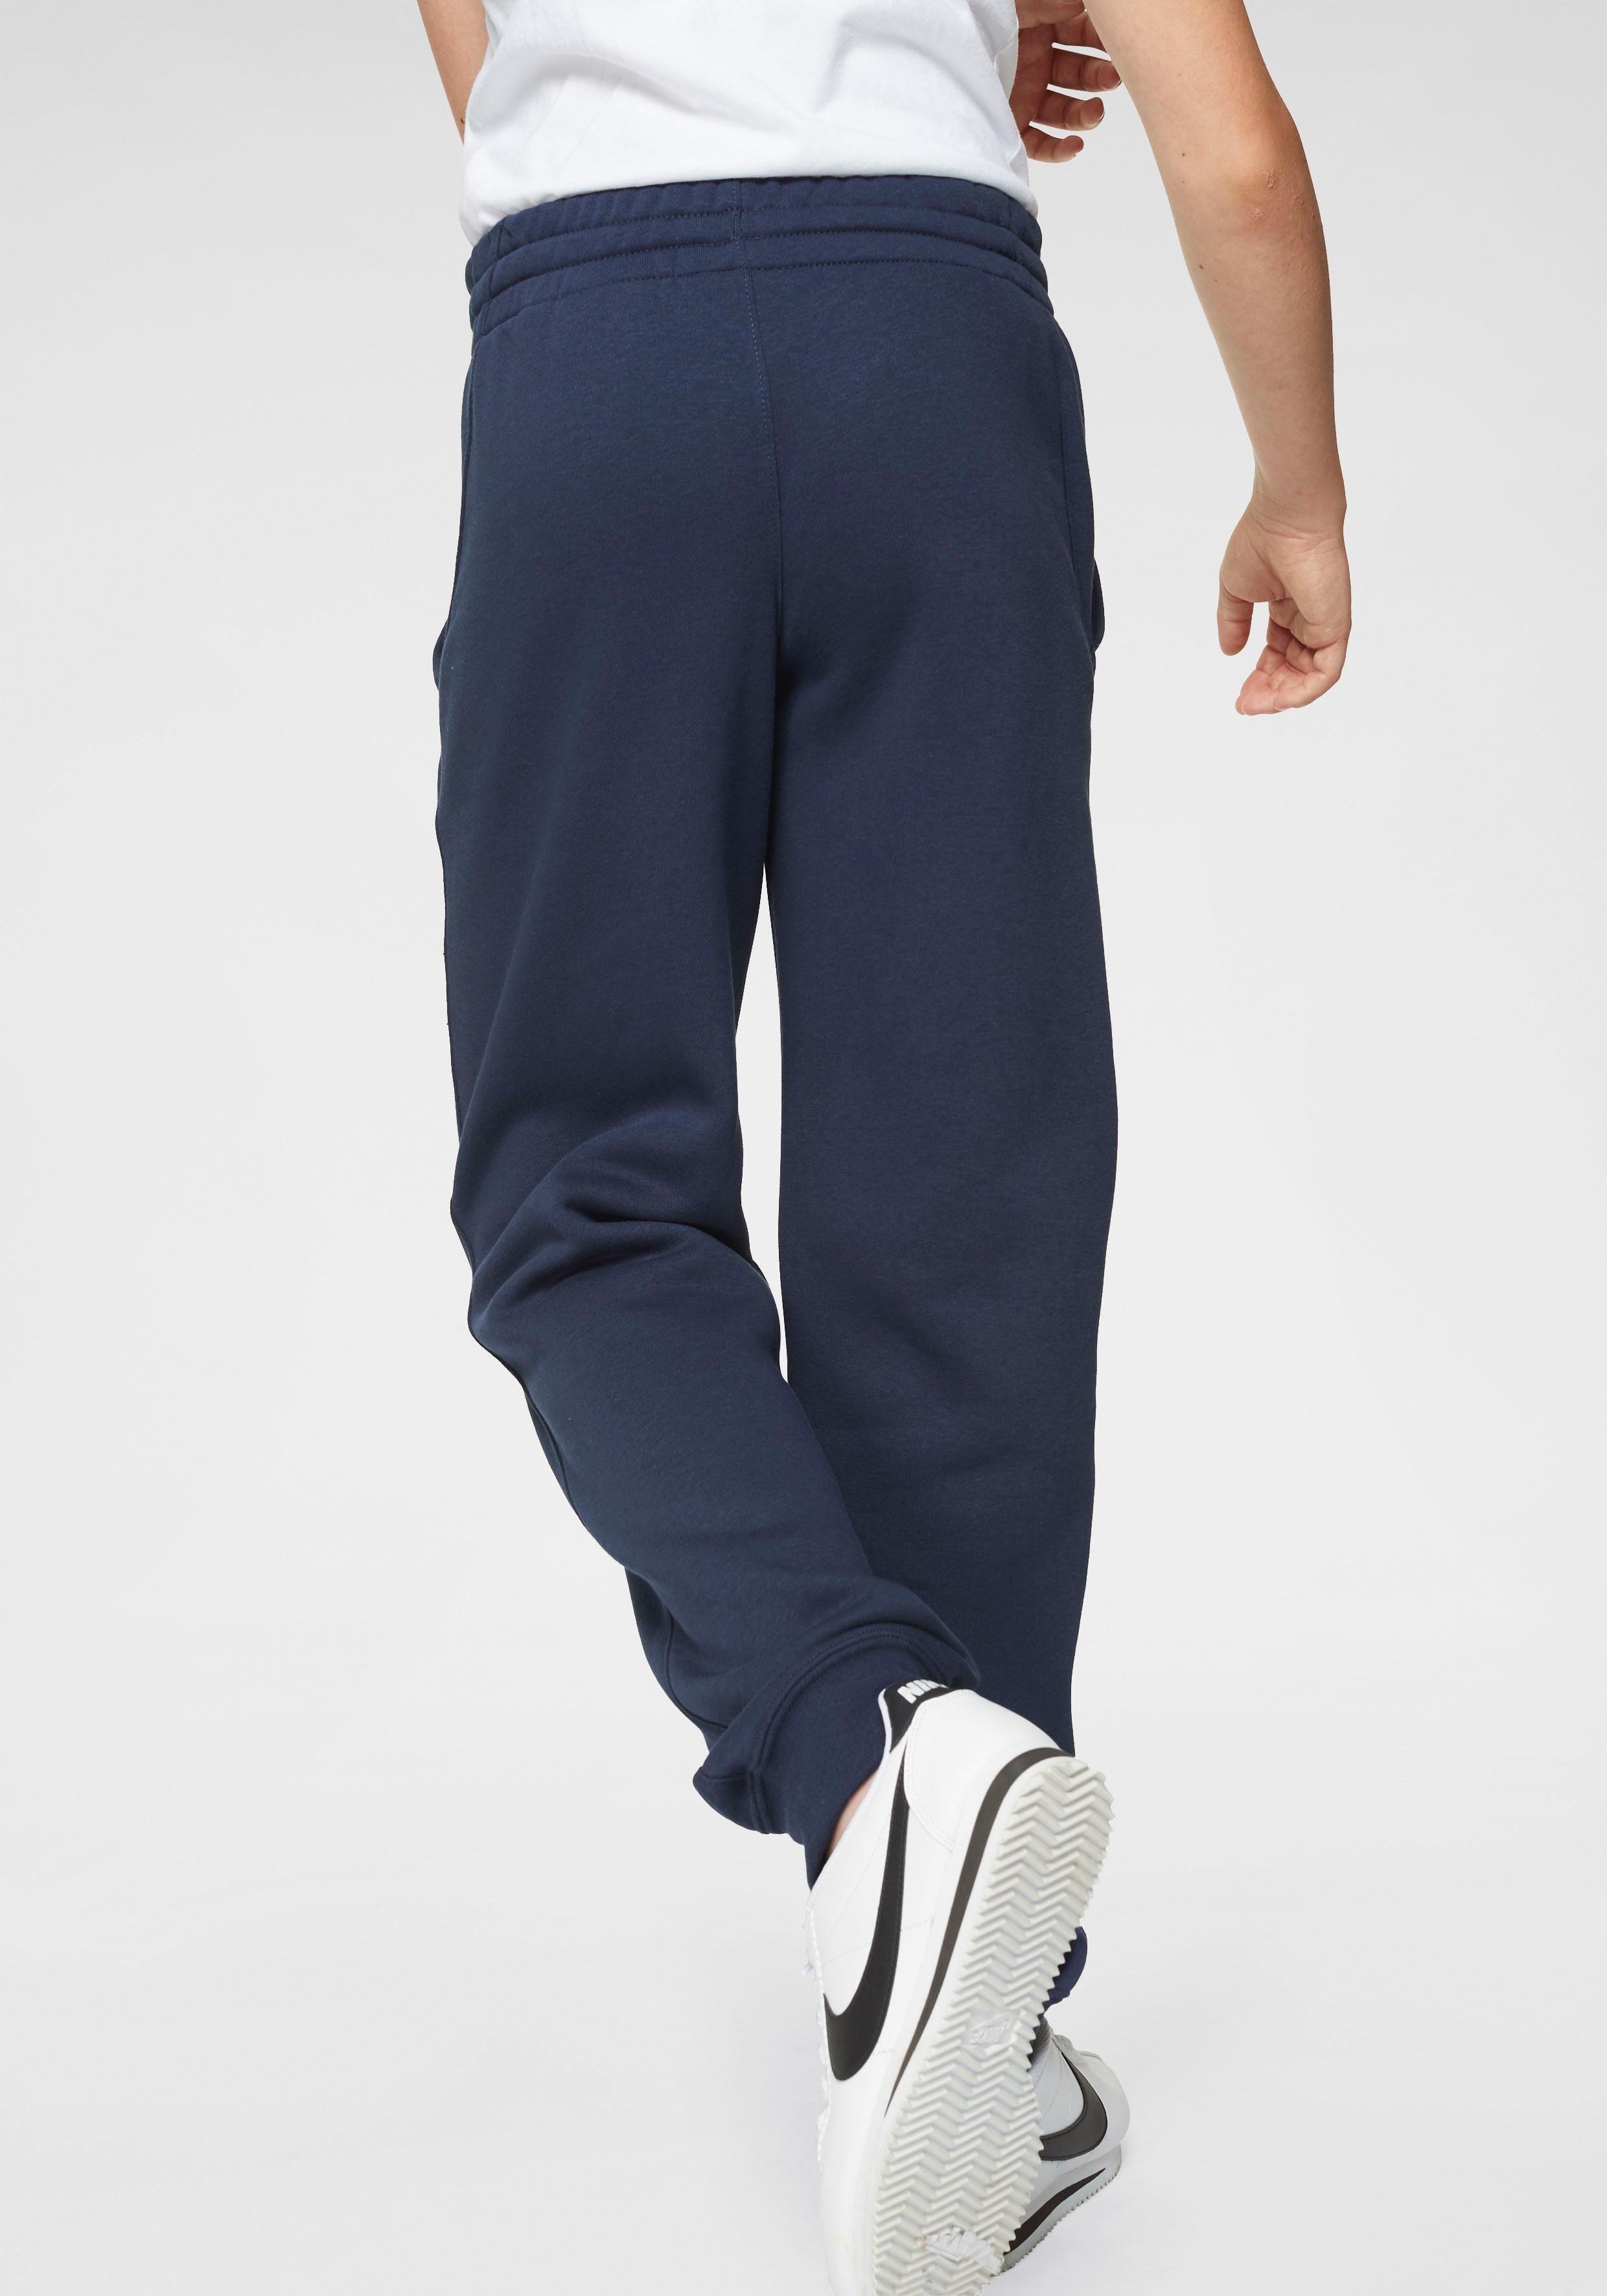 Sportswear NSW Nike dunkelblau PANT CLUB Jogginghose JOGGER B FLEECE